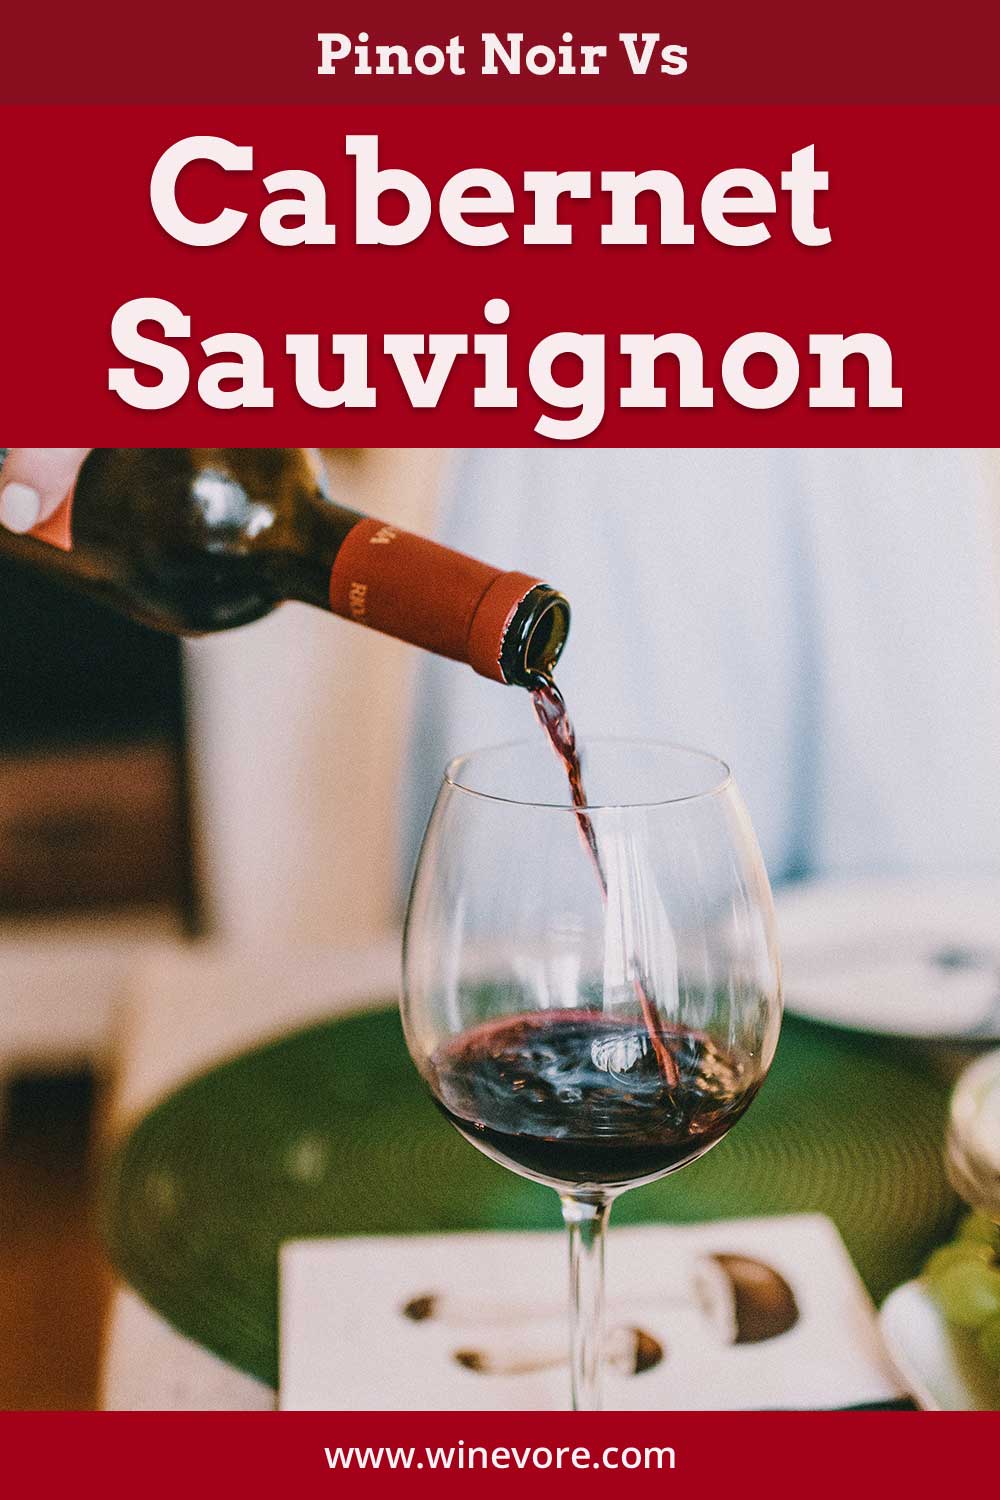 Pouring wine into a glass - Pinot Noir Vs Cabernet Sauvignon.